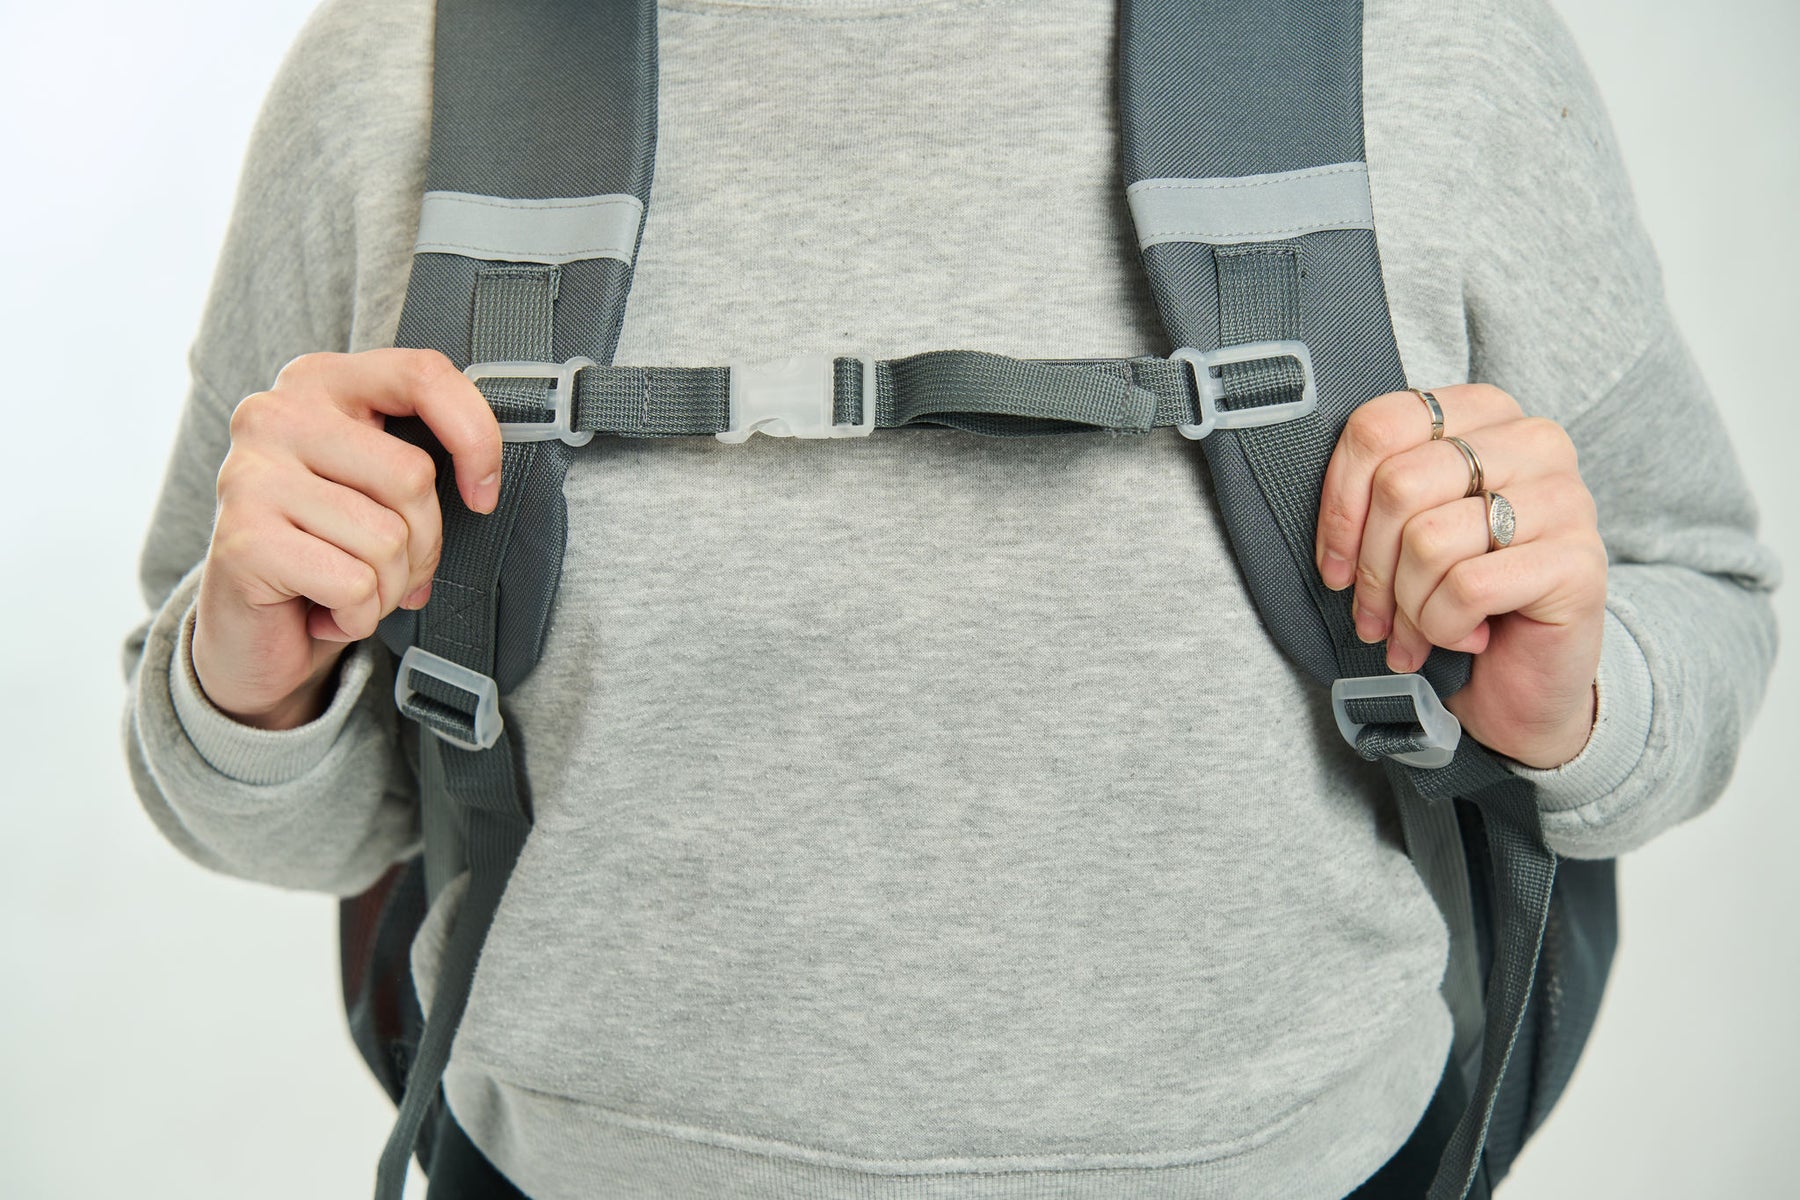 Mesh Backpack XXL (36 L) | Lightweight Heavy-Duty Clear Backpack | Reinforced 3D Mesh | H19.6" x W15" x D7" | Grey Armadillo